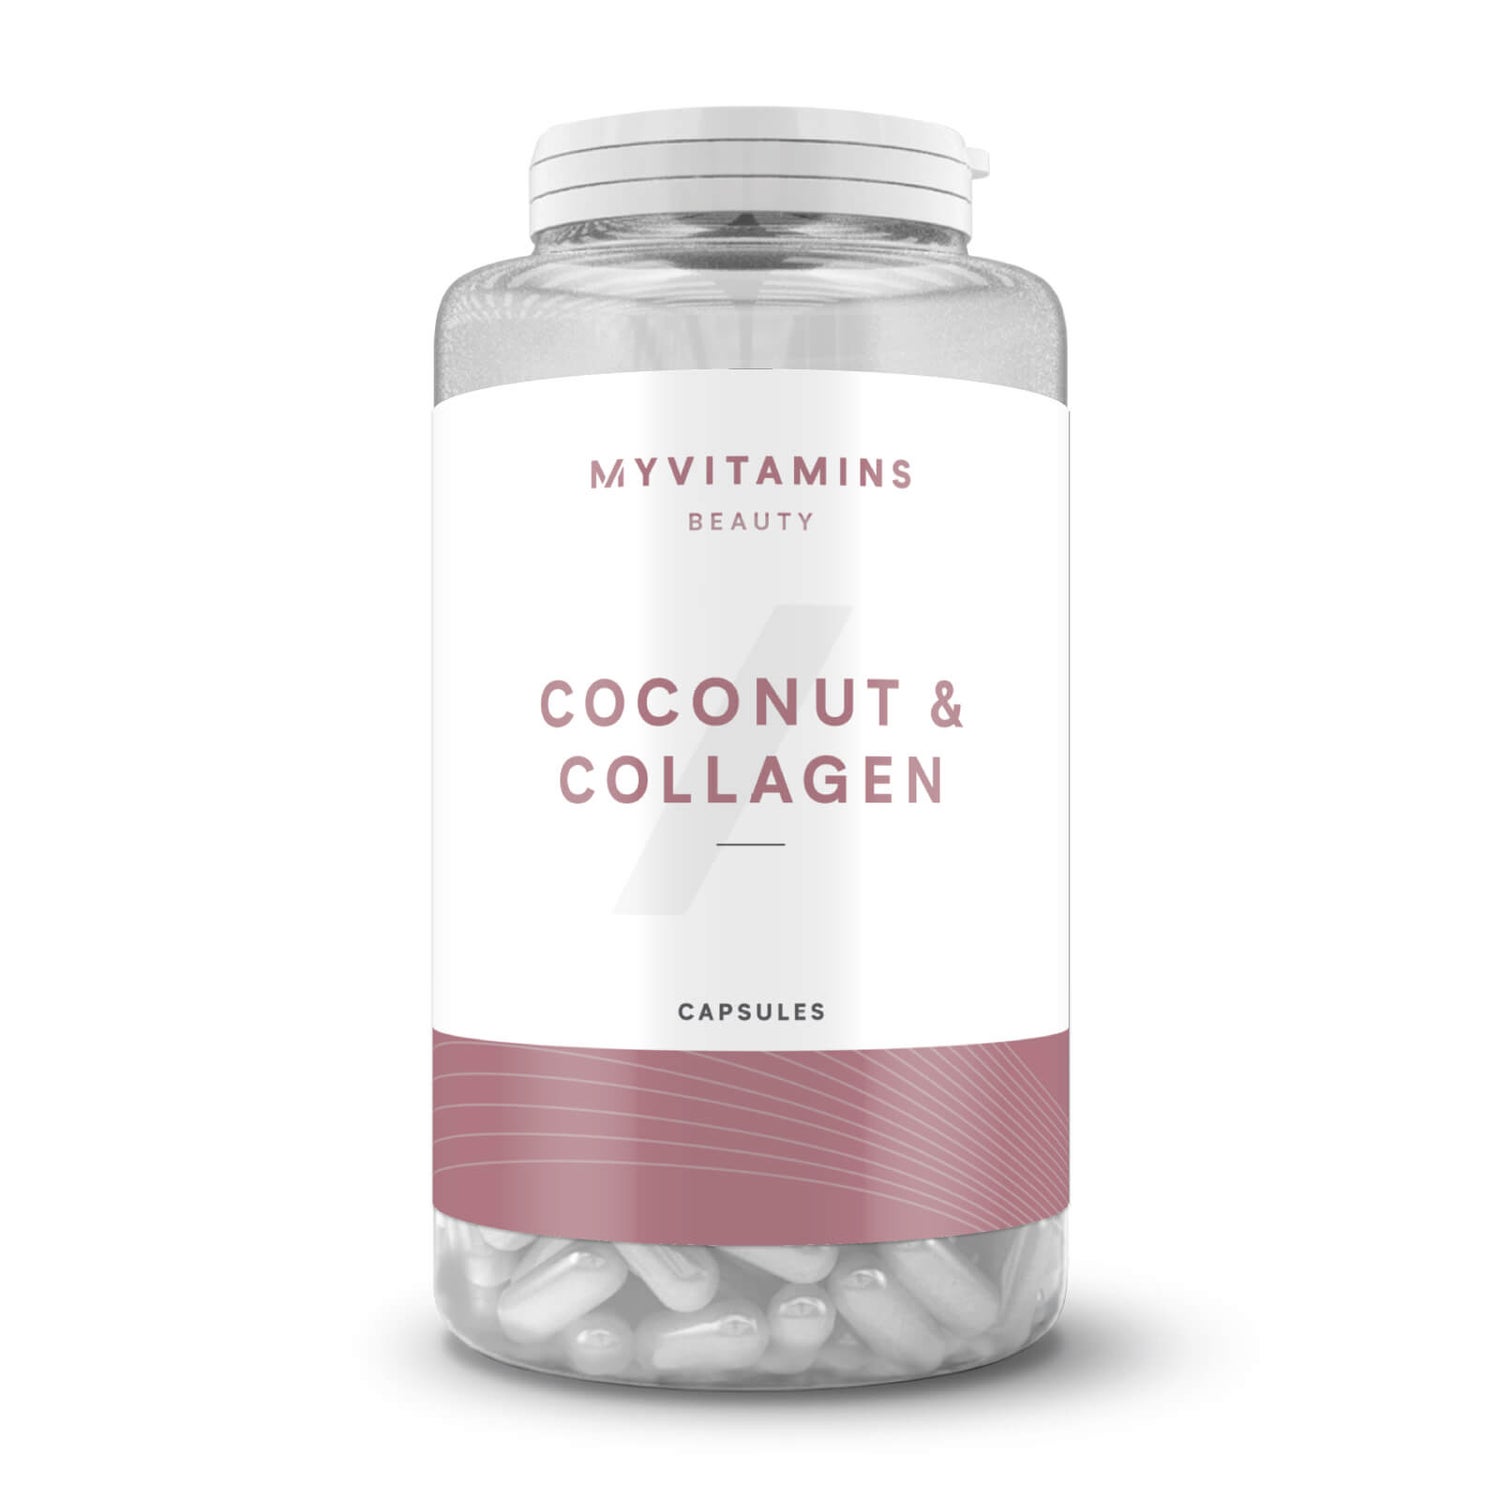 Myvitamins Coconut and Collagen